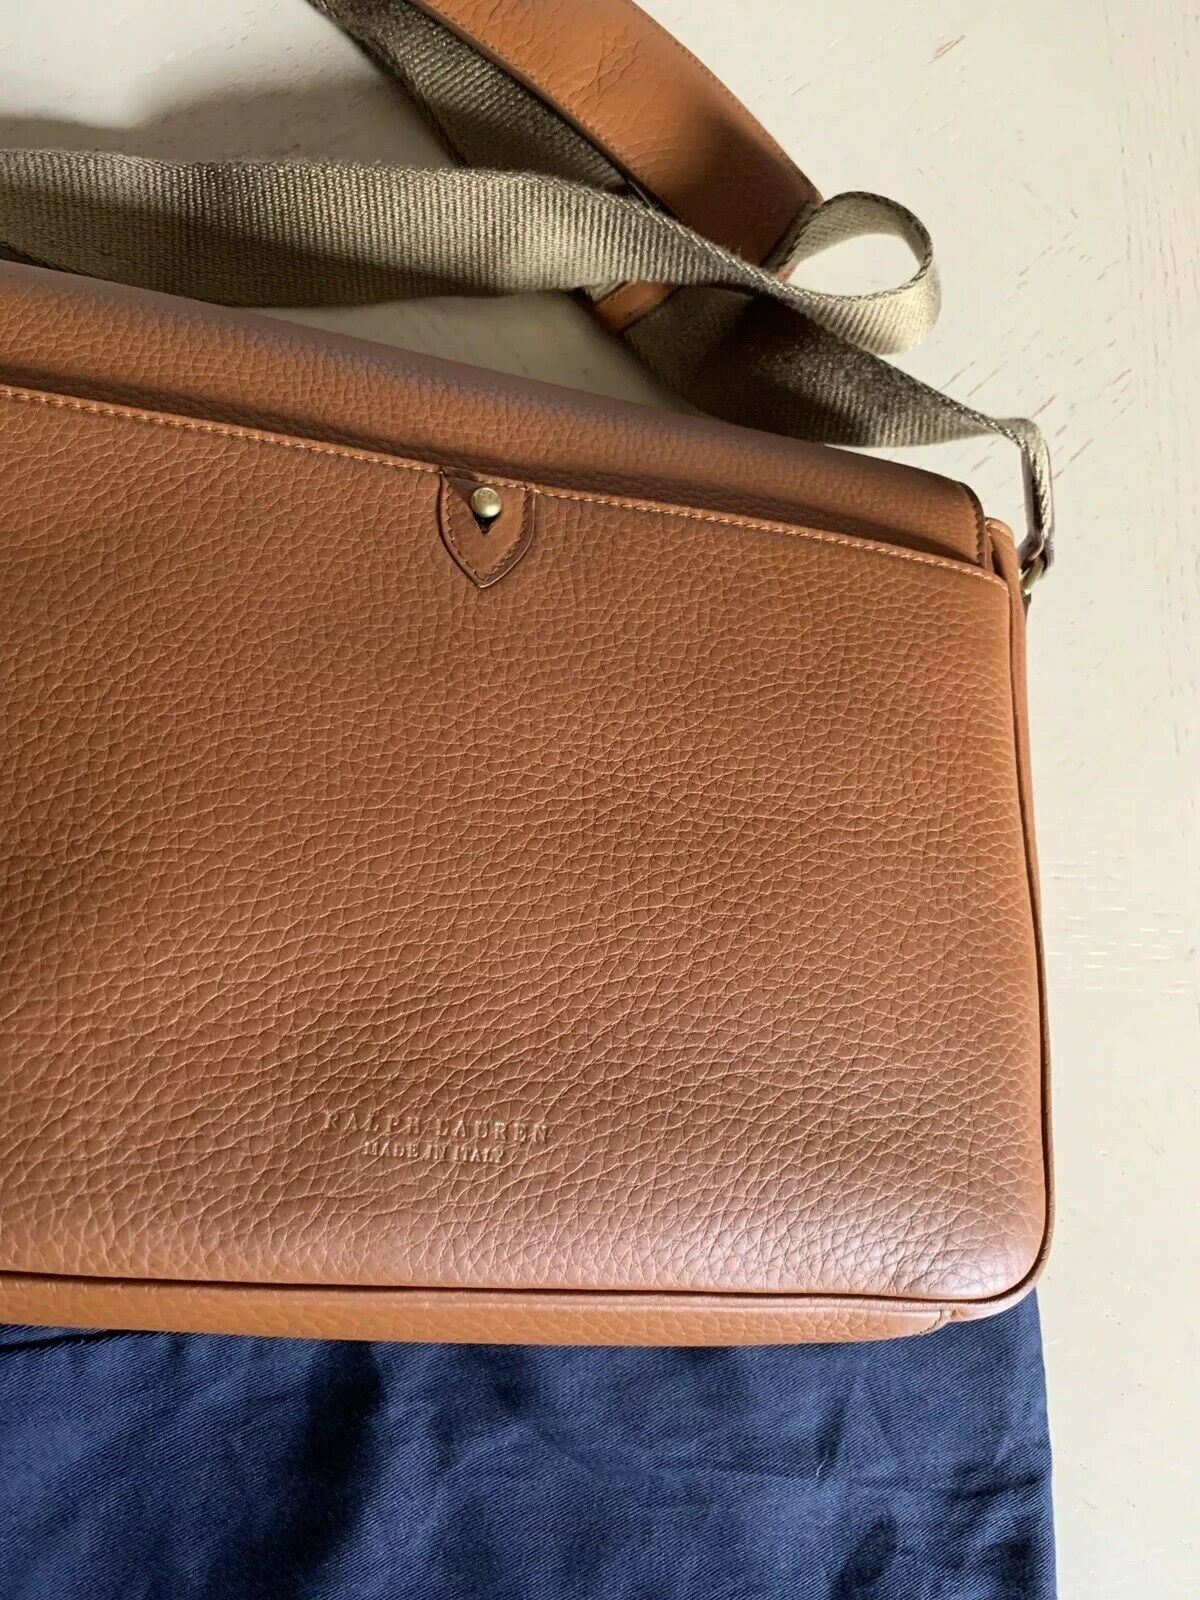 New $1200 Ralph Lauren Purple Label Leather Messenger Sholder Bag Brown Italy